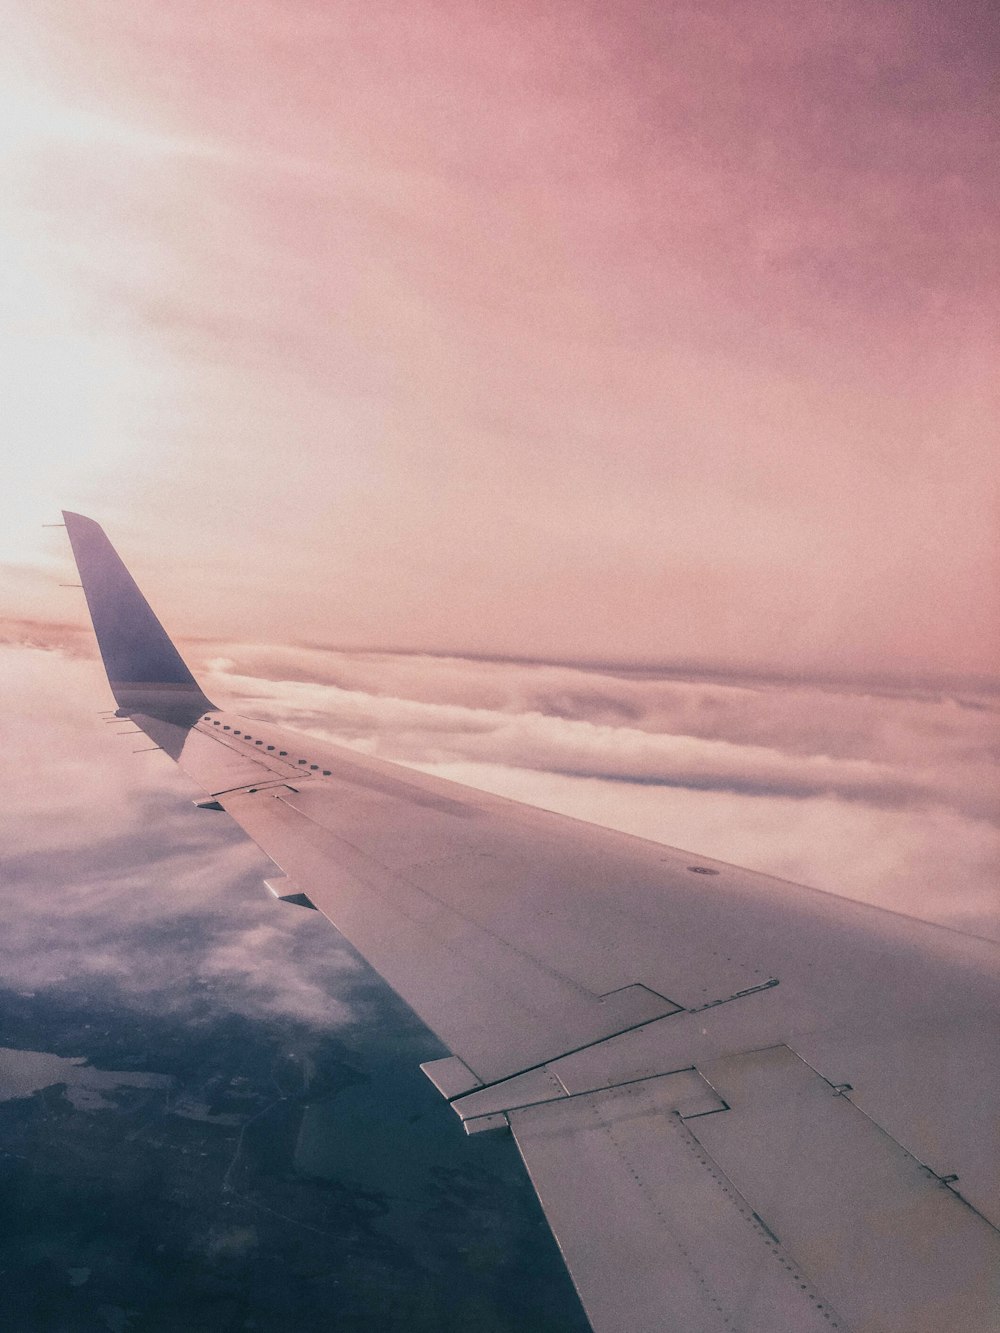 passenger plane above white clouds